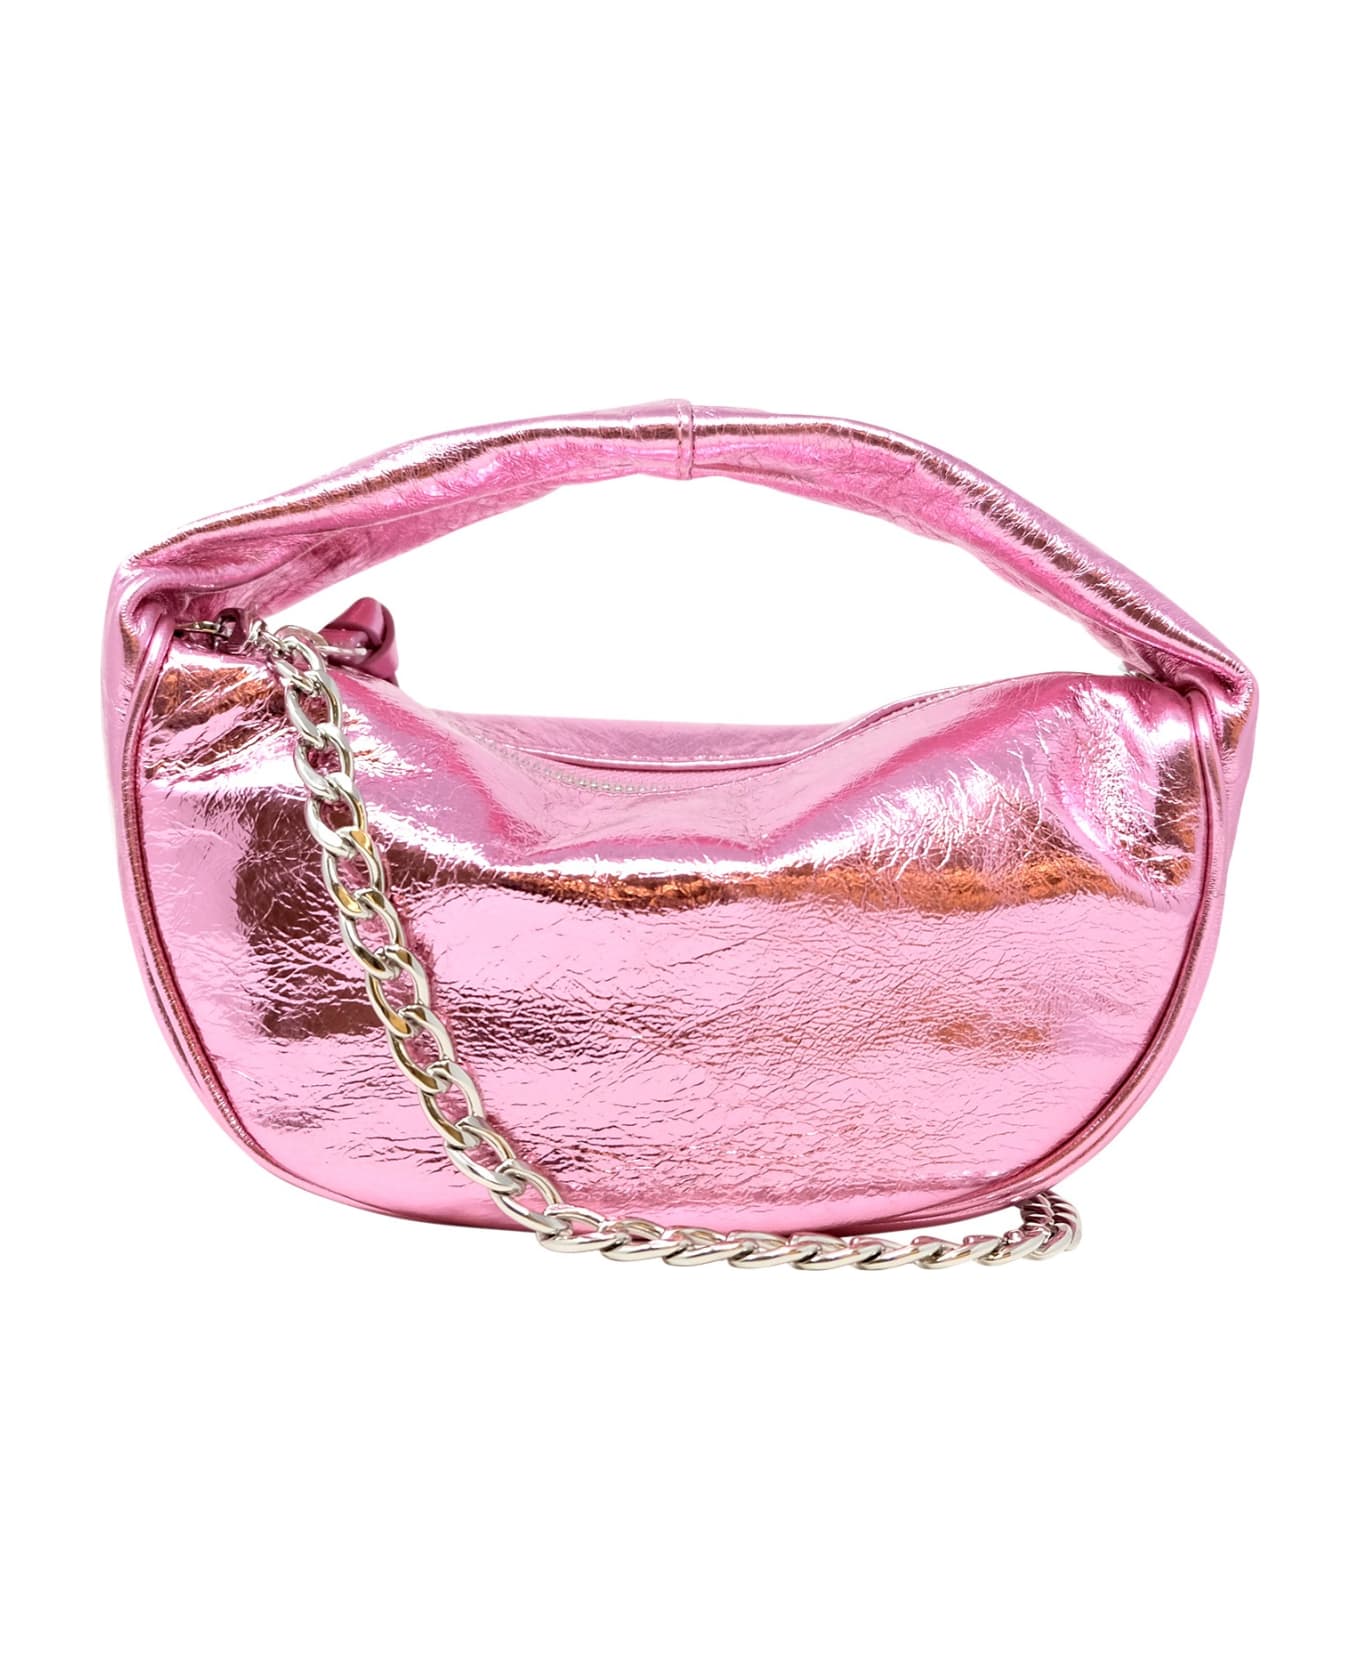 BY FAR Baby Cush Pink Metallic Leather Handbag